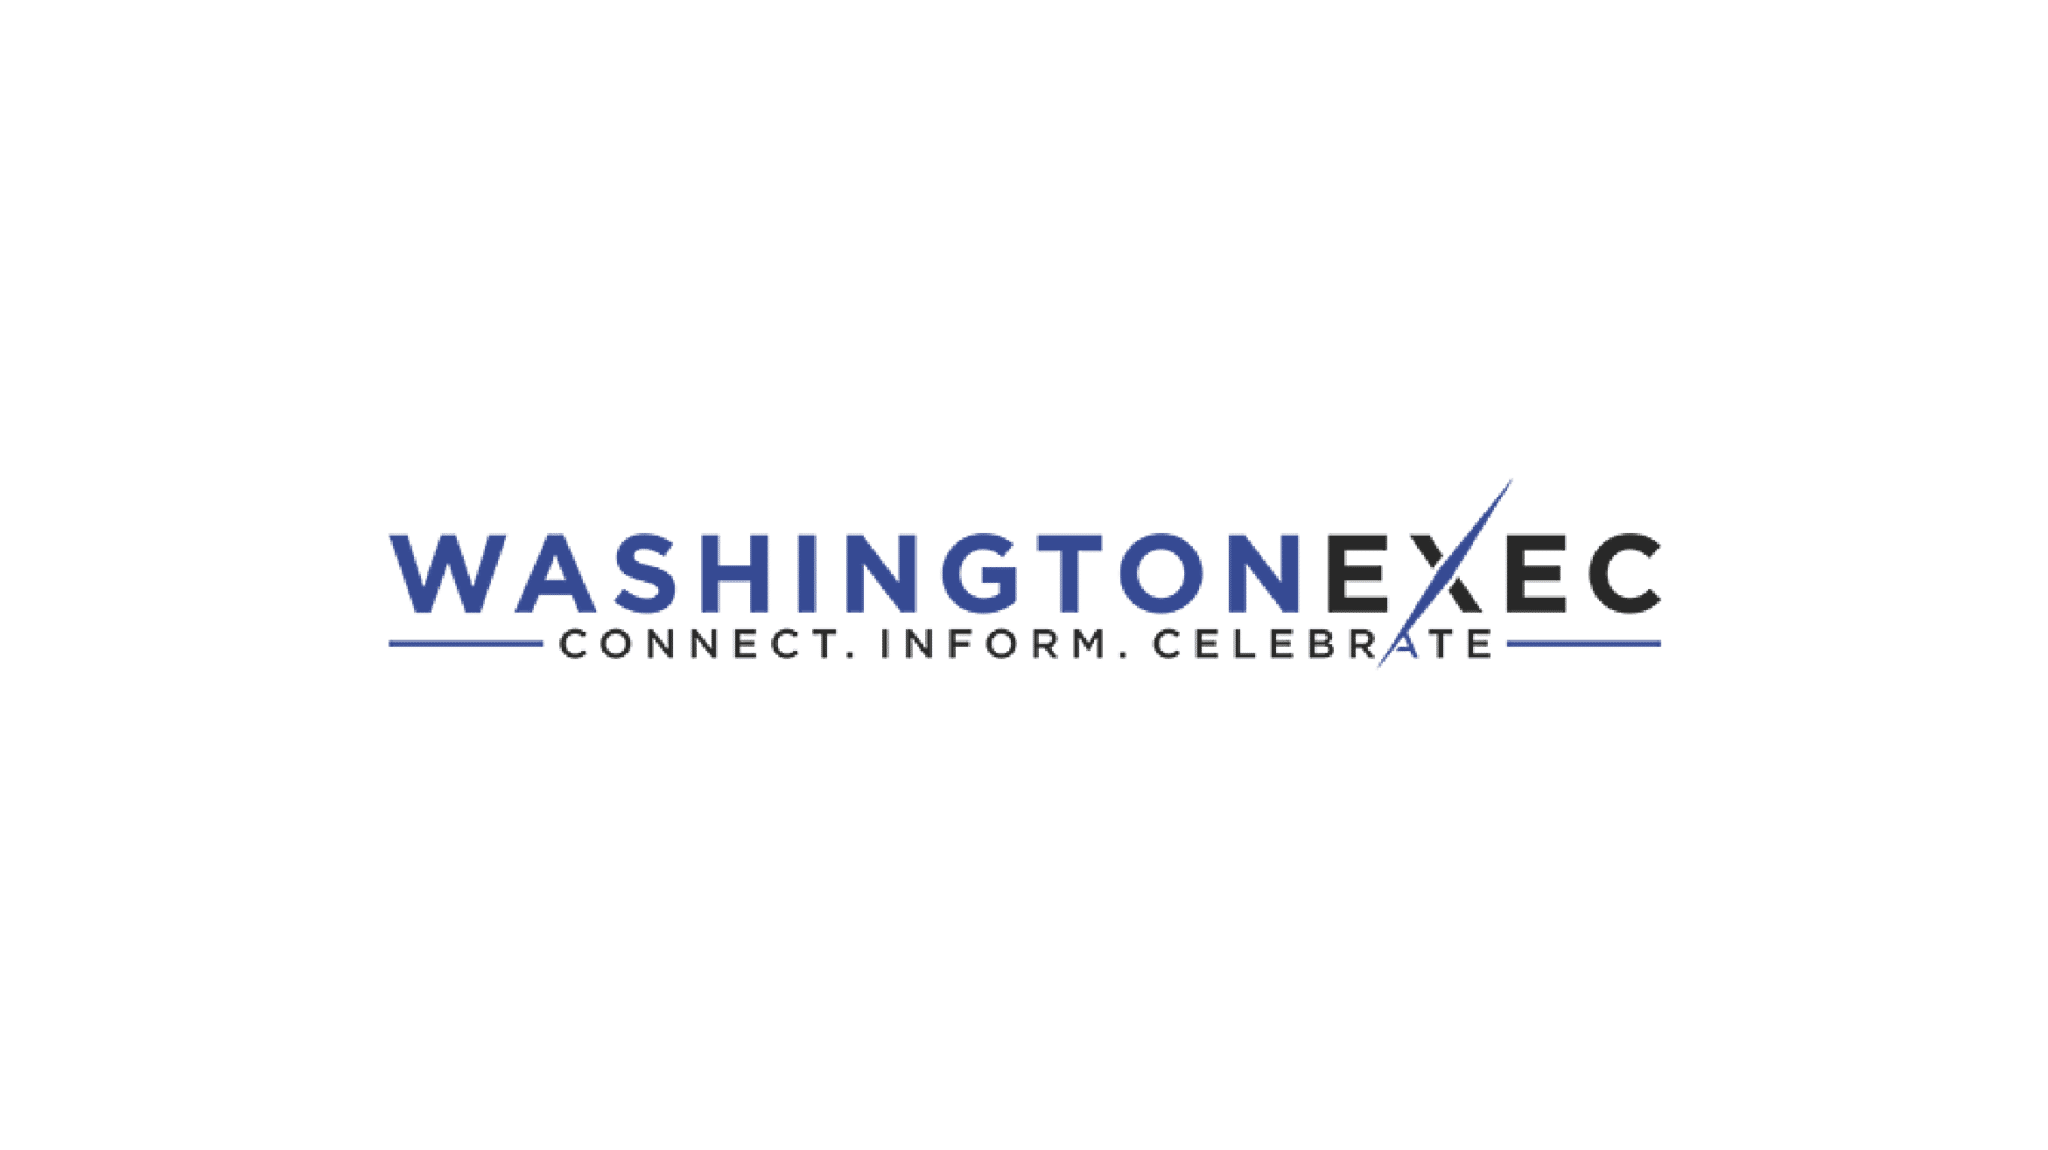 Logo for Washington Exec. Subhead is Connect. Inform. Celebrate.